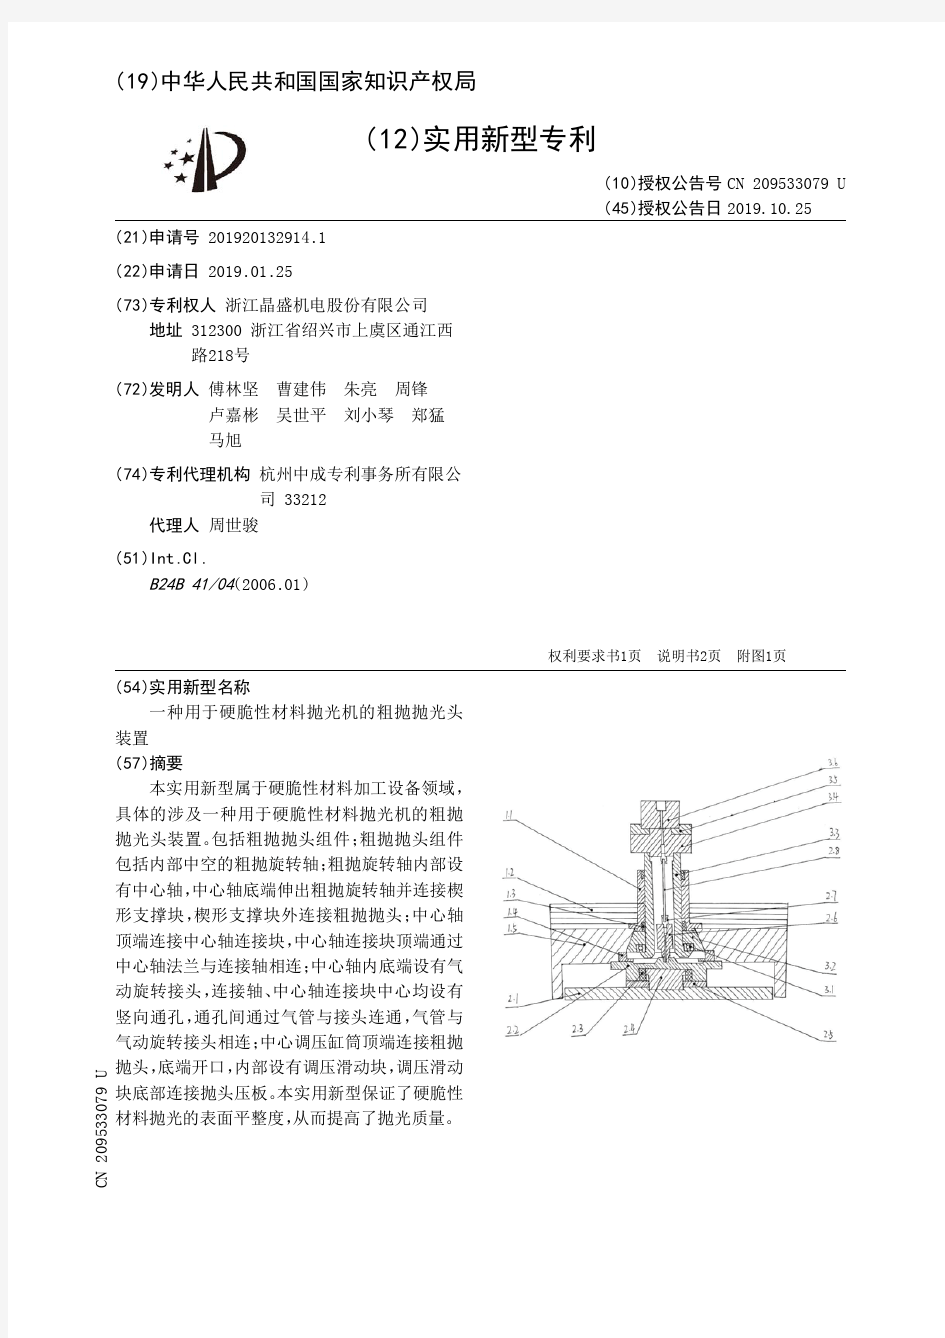 【CN209533079U】一种用于硬脆性材料抛光机的粗抛抛光头装置【专利】